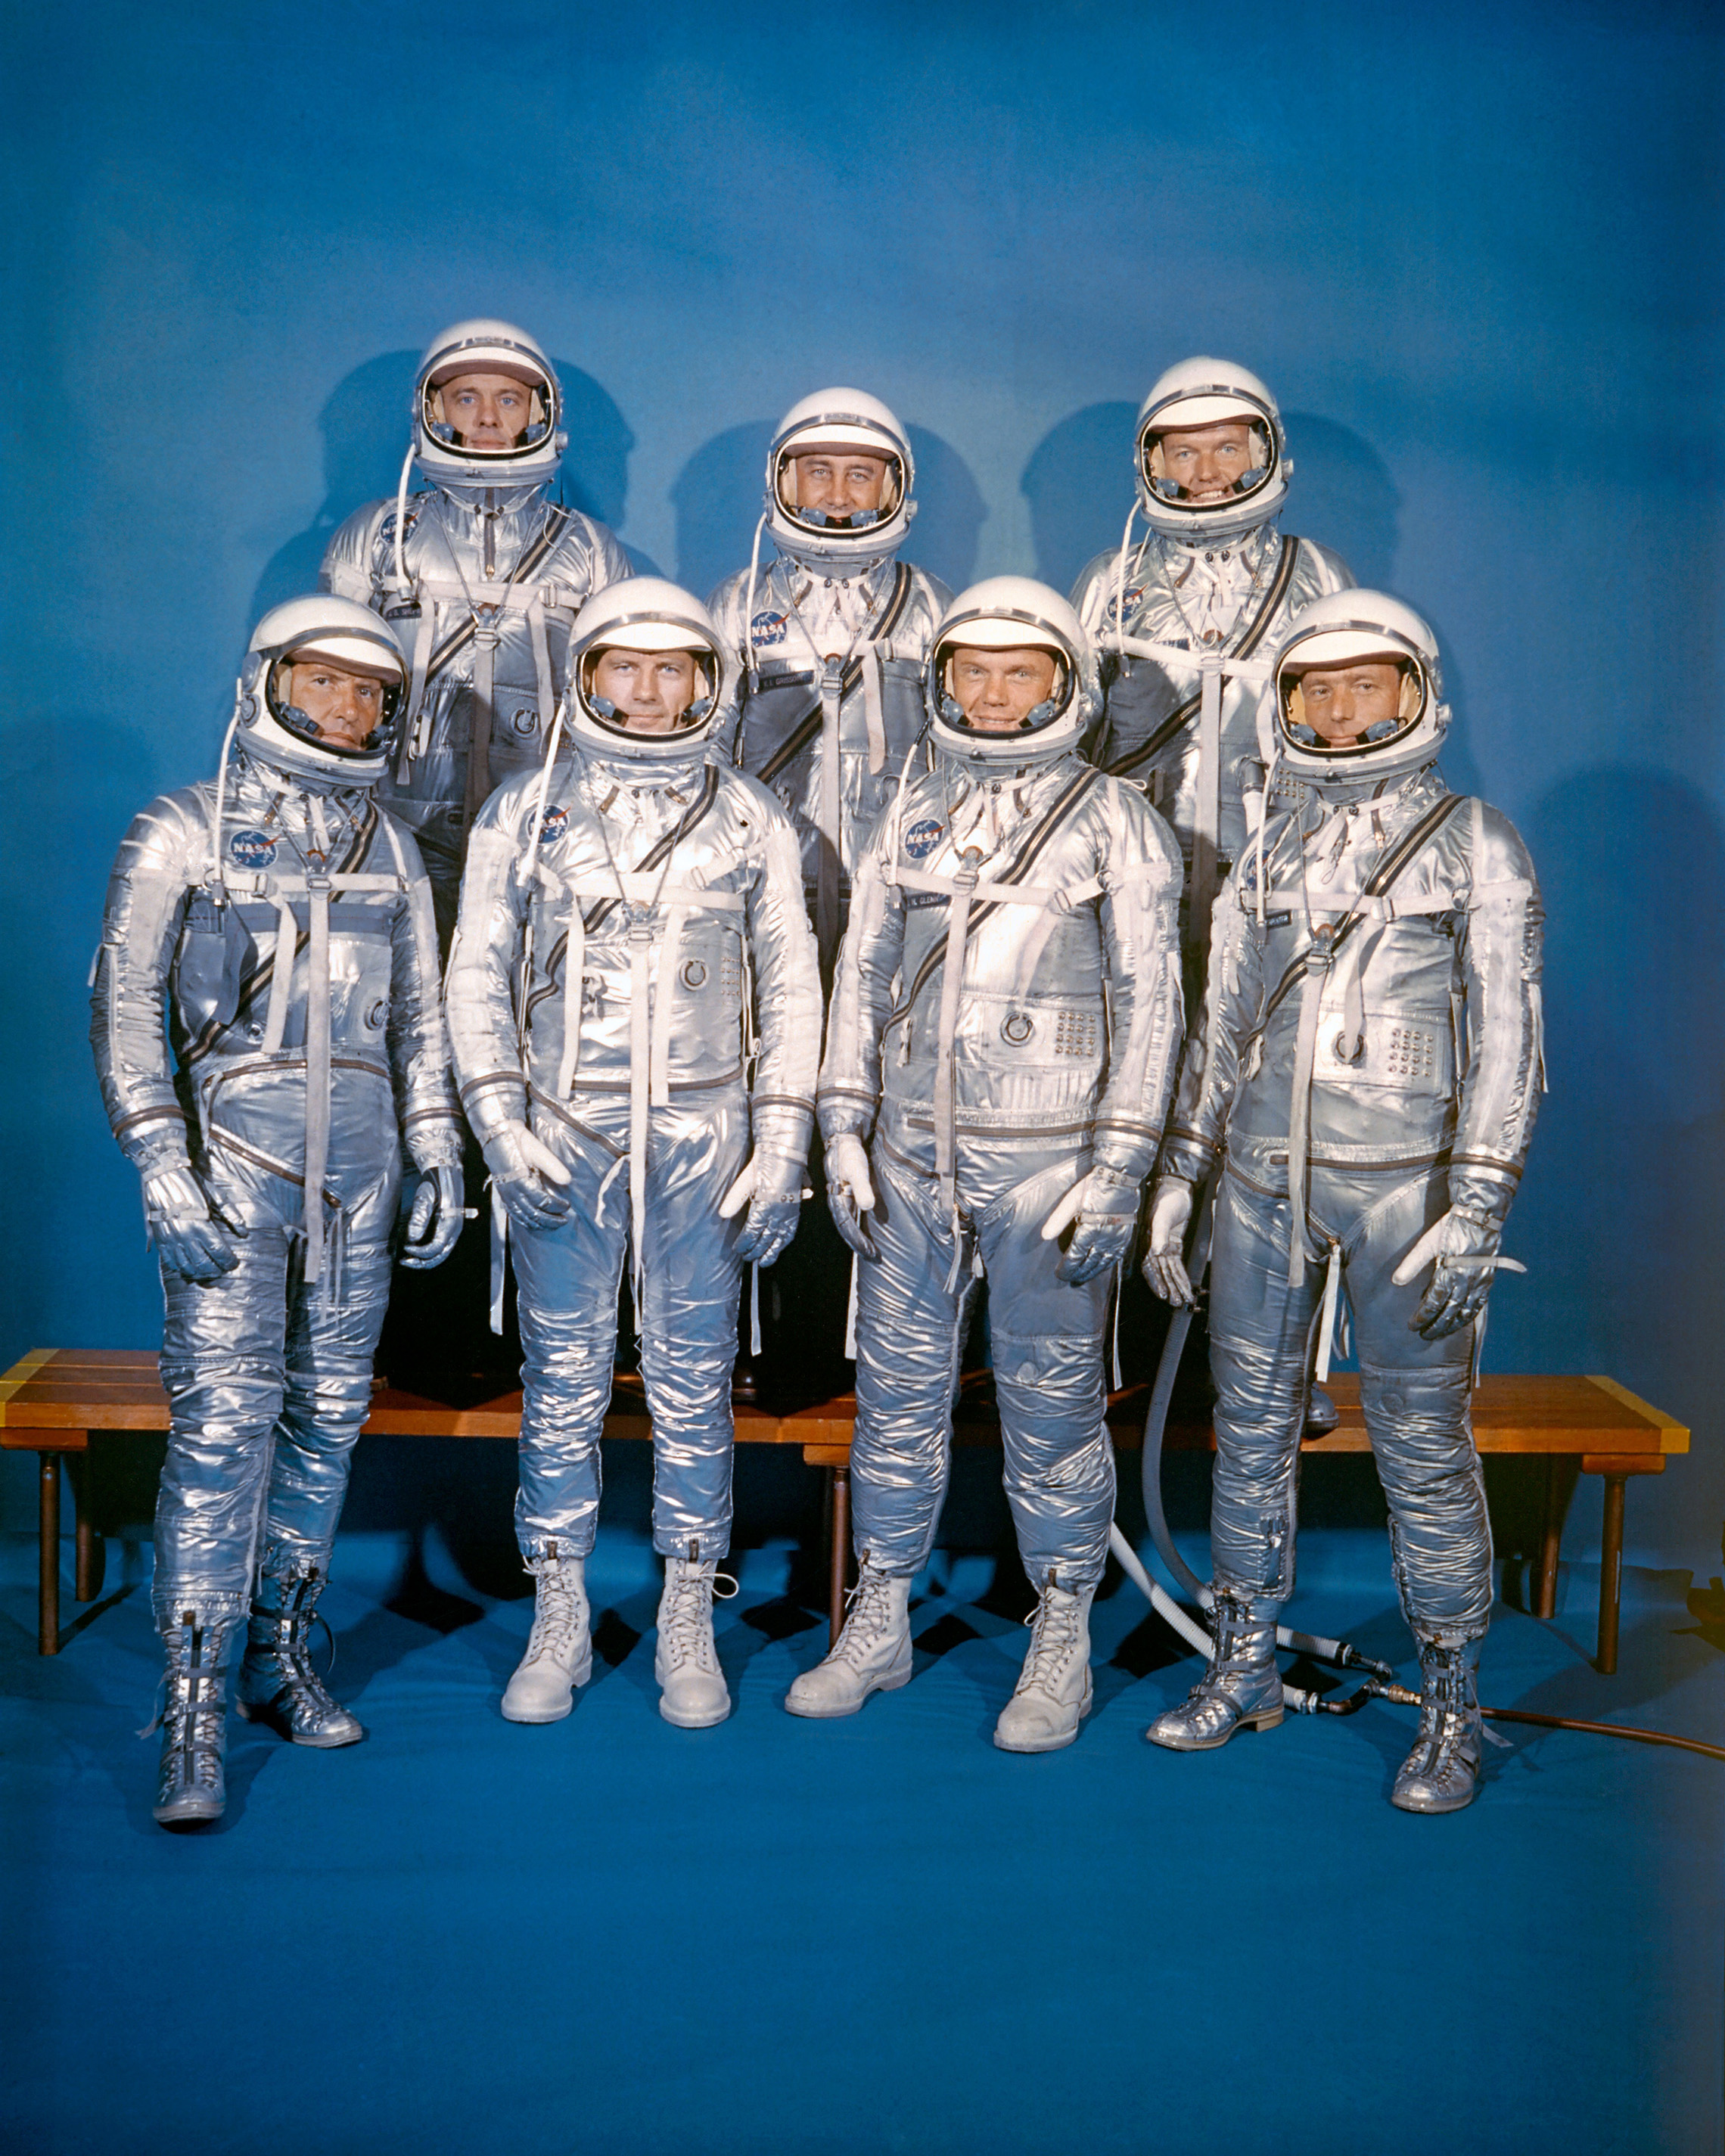 Il 9 aprile 1959 la NASA introdusse la sua prima classe di astronauti, la Mercury 7. Prima fila, da sinistra a destra: Walter M. Schirra, Jr., Donald K." Deke " Slayton, John H. Glenn, Jr. e M. Scott Carpenter; seconda fila, Alan B. Shepard, Jr., Virgil I. "Gus" Grissom e L. Gordon Cooper, Jr. (NASA)"Deke" Slayton, John H. Glenn, Jr., and M. Scott Carpenter; back row, Alan B. Shepard, Jr., Virgil I. "Gus" Grissom, and L. Gordon Cooper, Jr. (NASA)